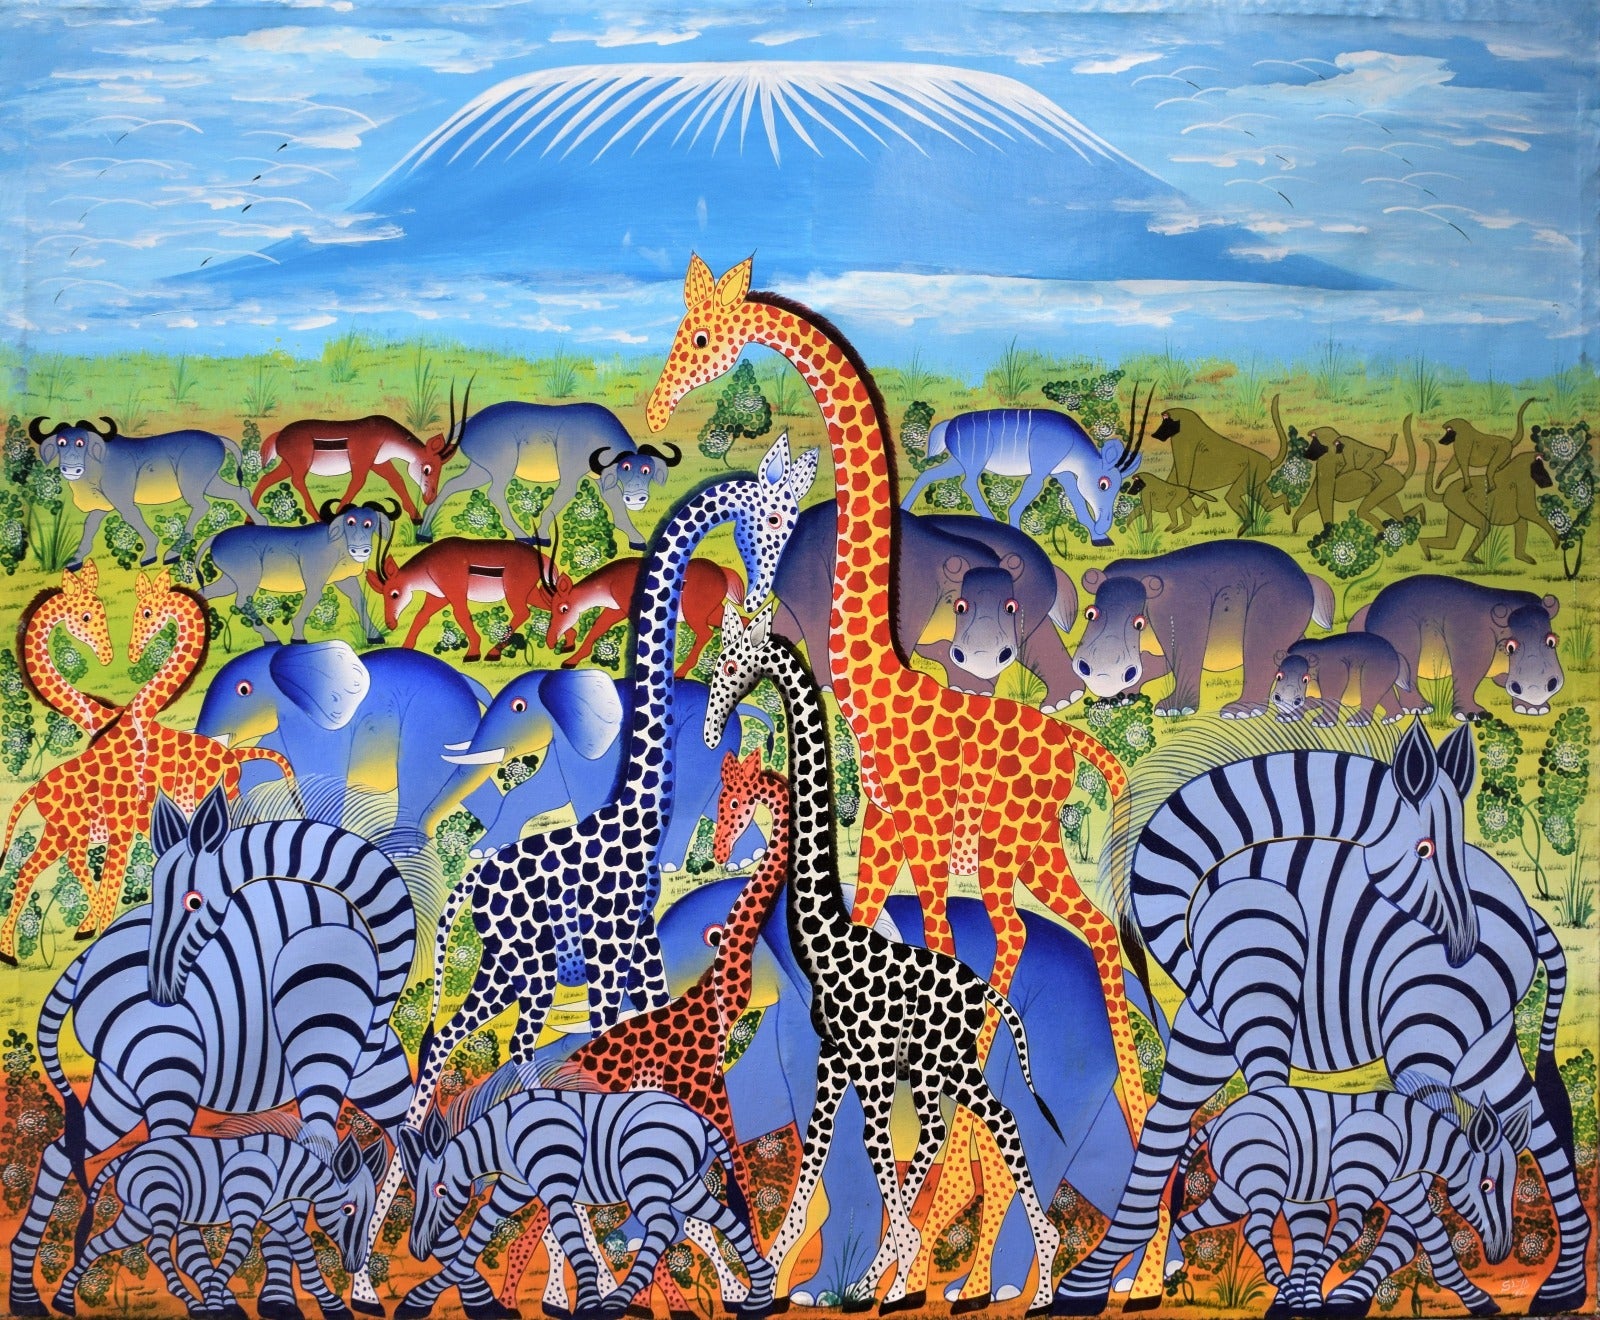 African art of animals enjoying for sale